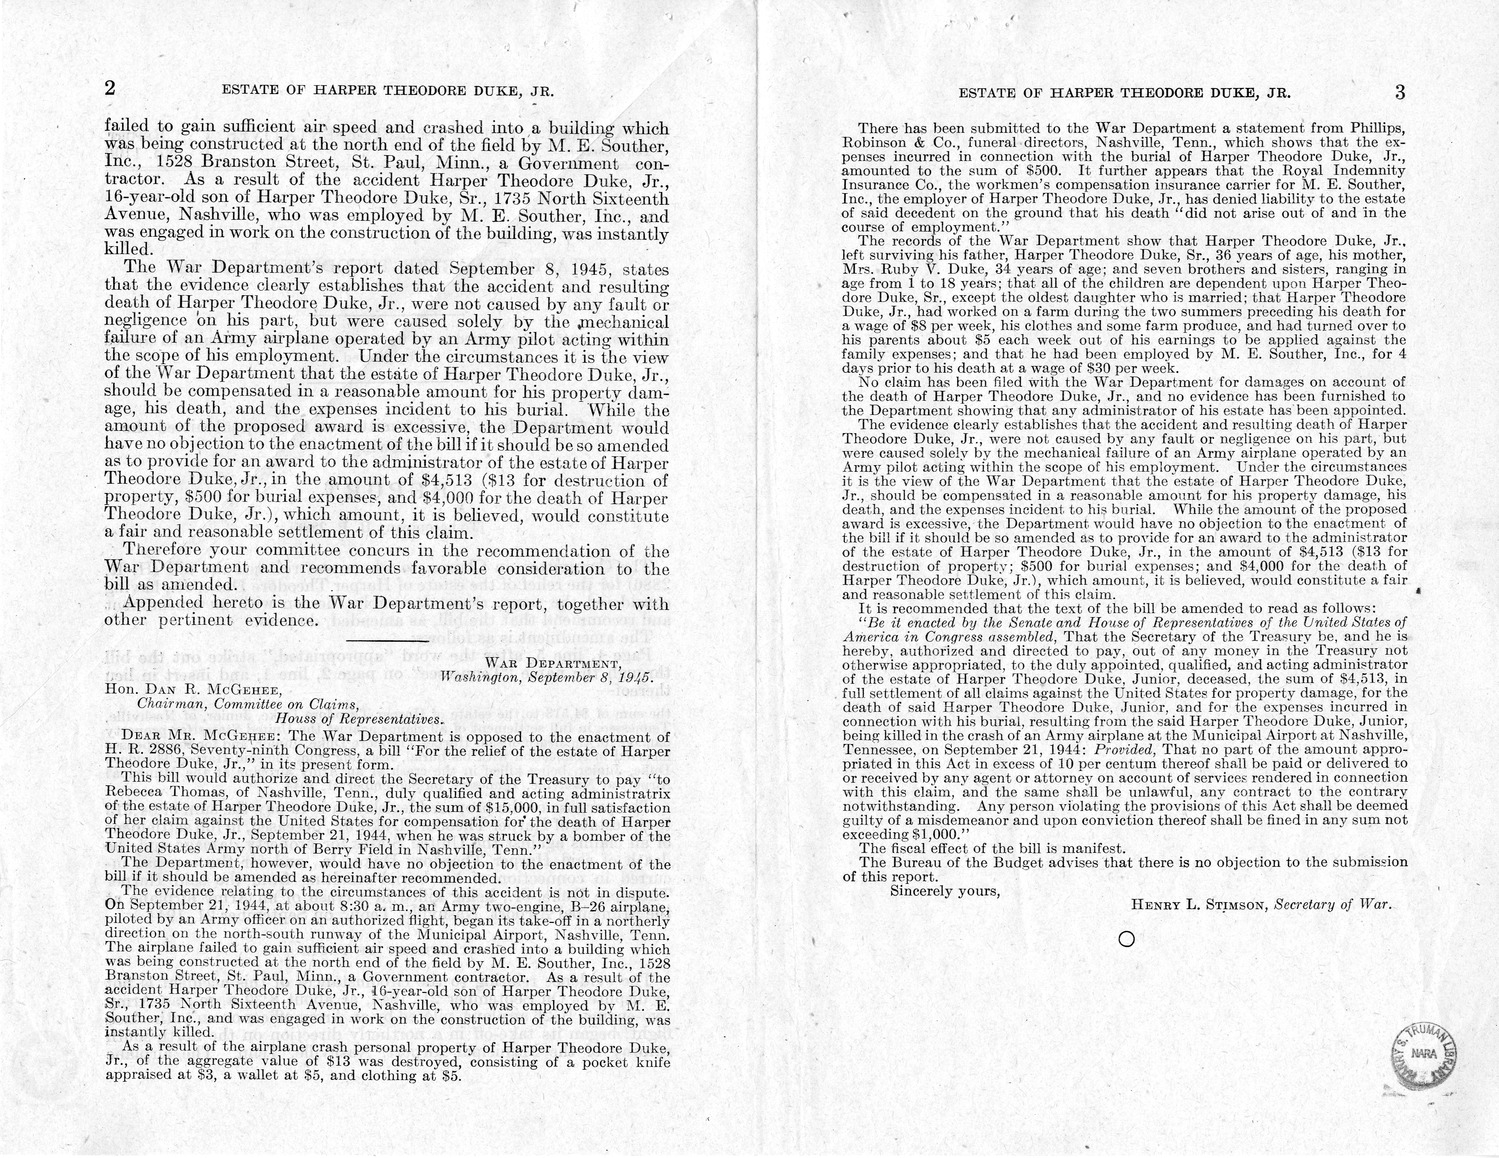 Memorandum from Frederick J. Bailey to M. C. Latta, H.R. 2886, For the Relief of the Estate of Harper Theodore Duke, Junior, with Attachments